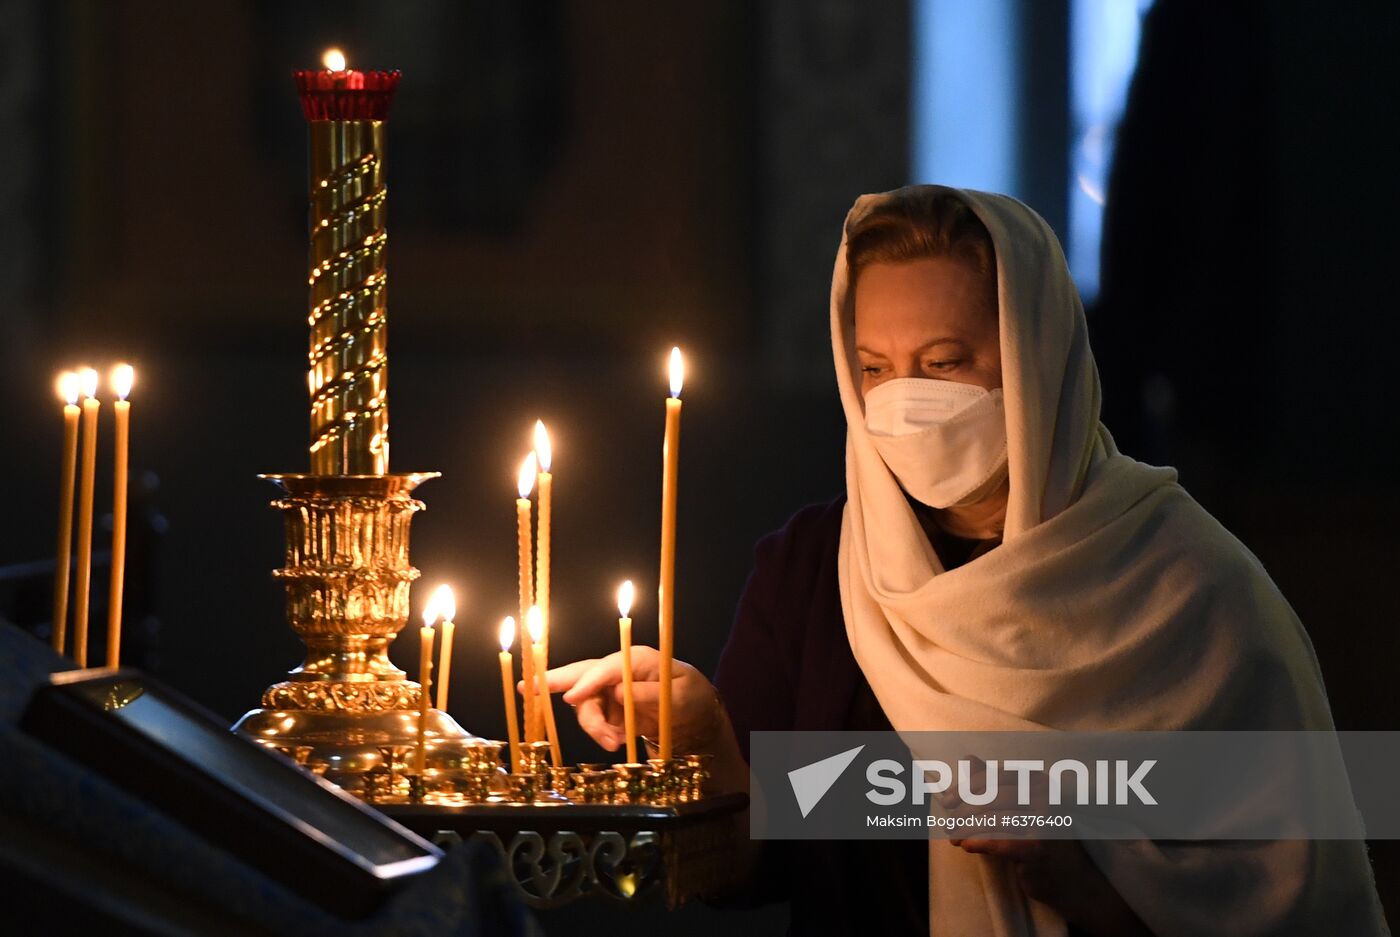 Russia Kazan Mother of God Icon Feast